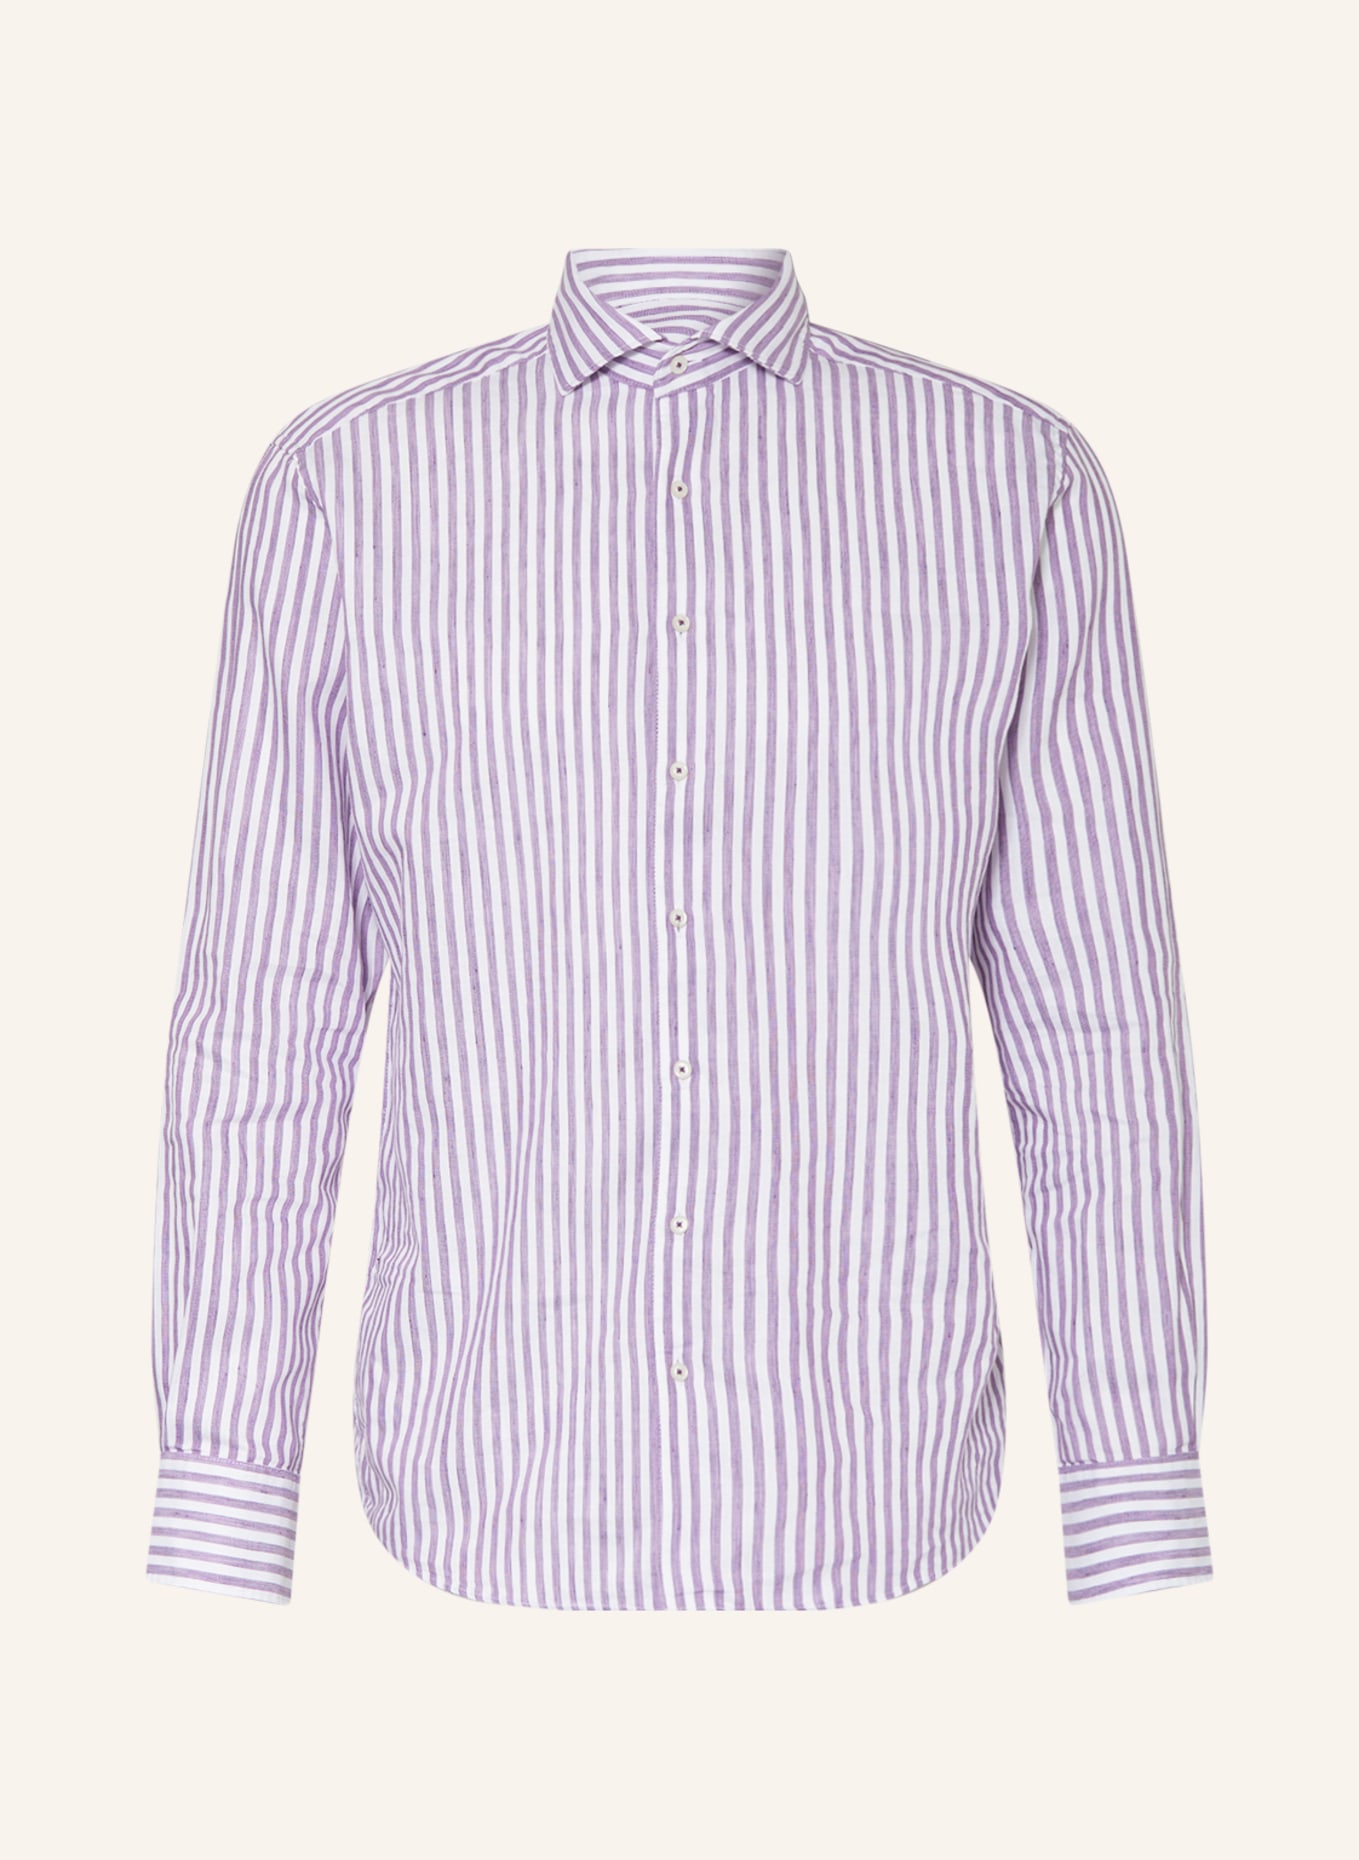 ETERNA 1863 Shirt modern in linen light white/ purple with fit